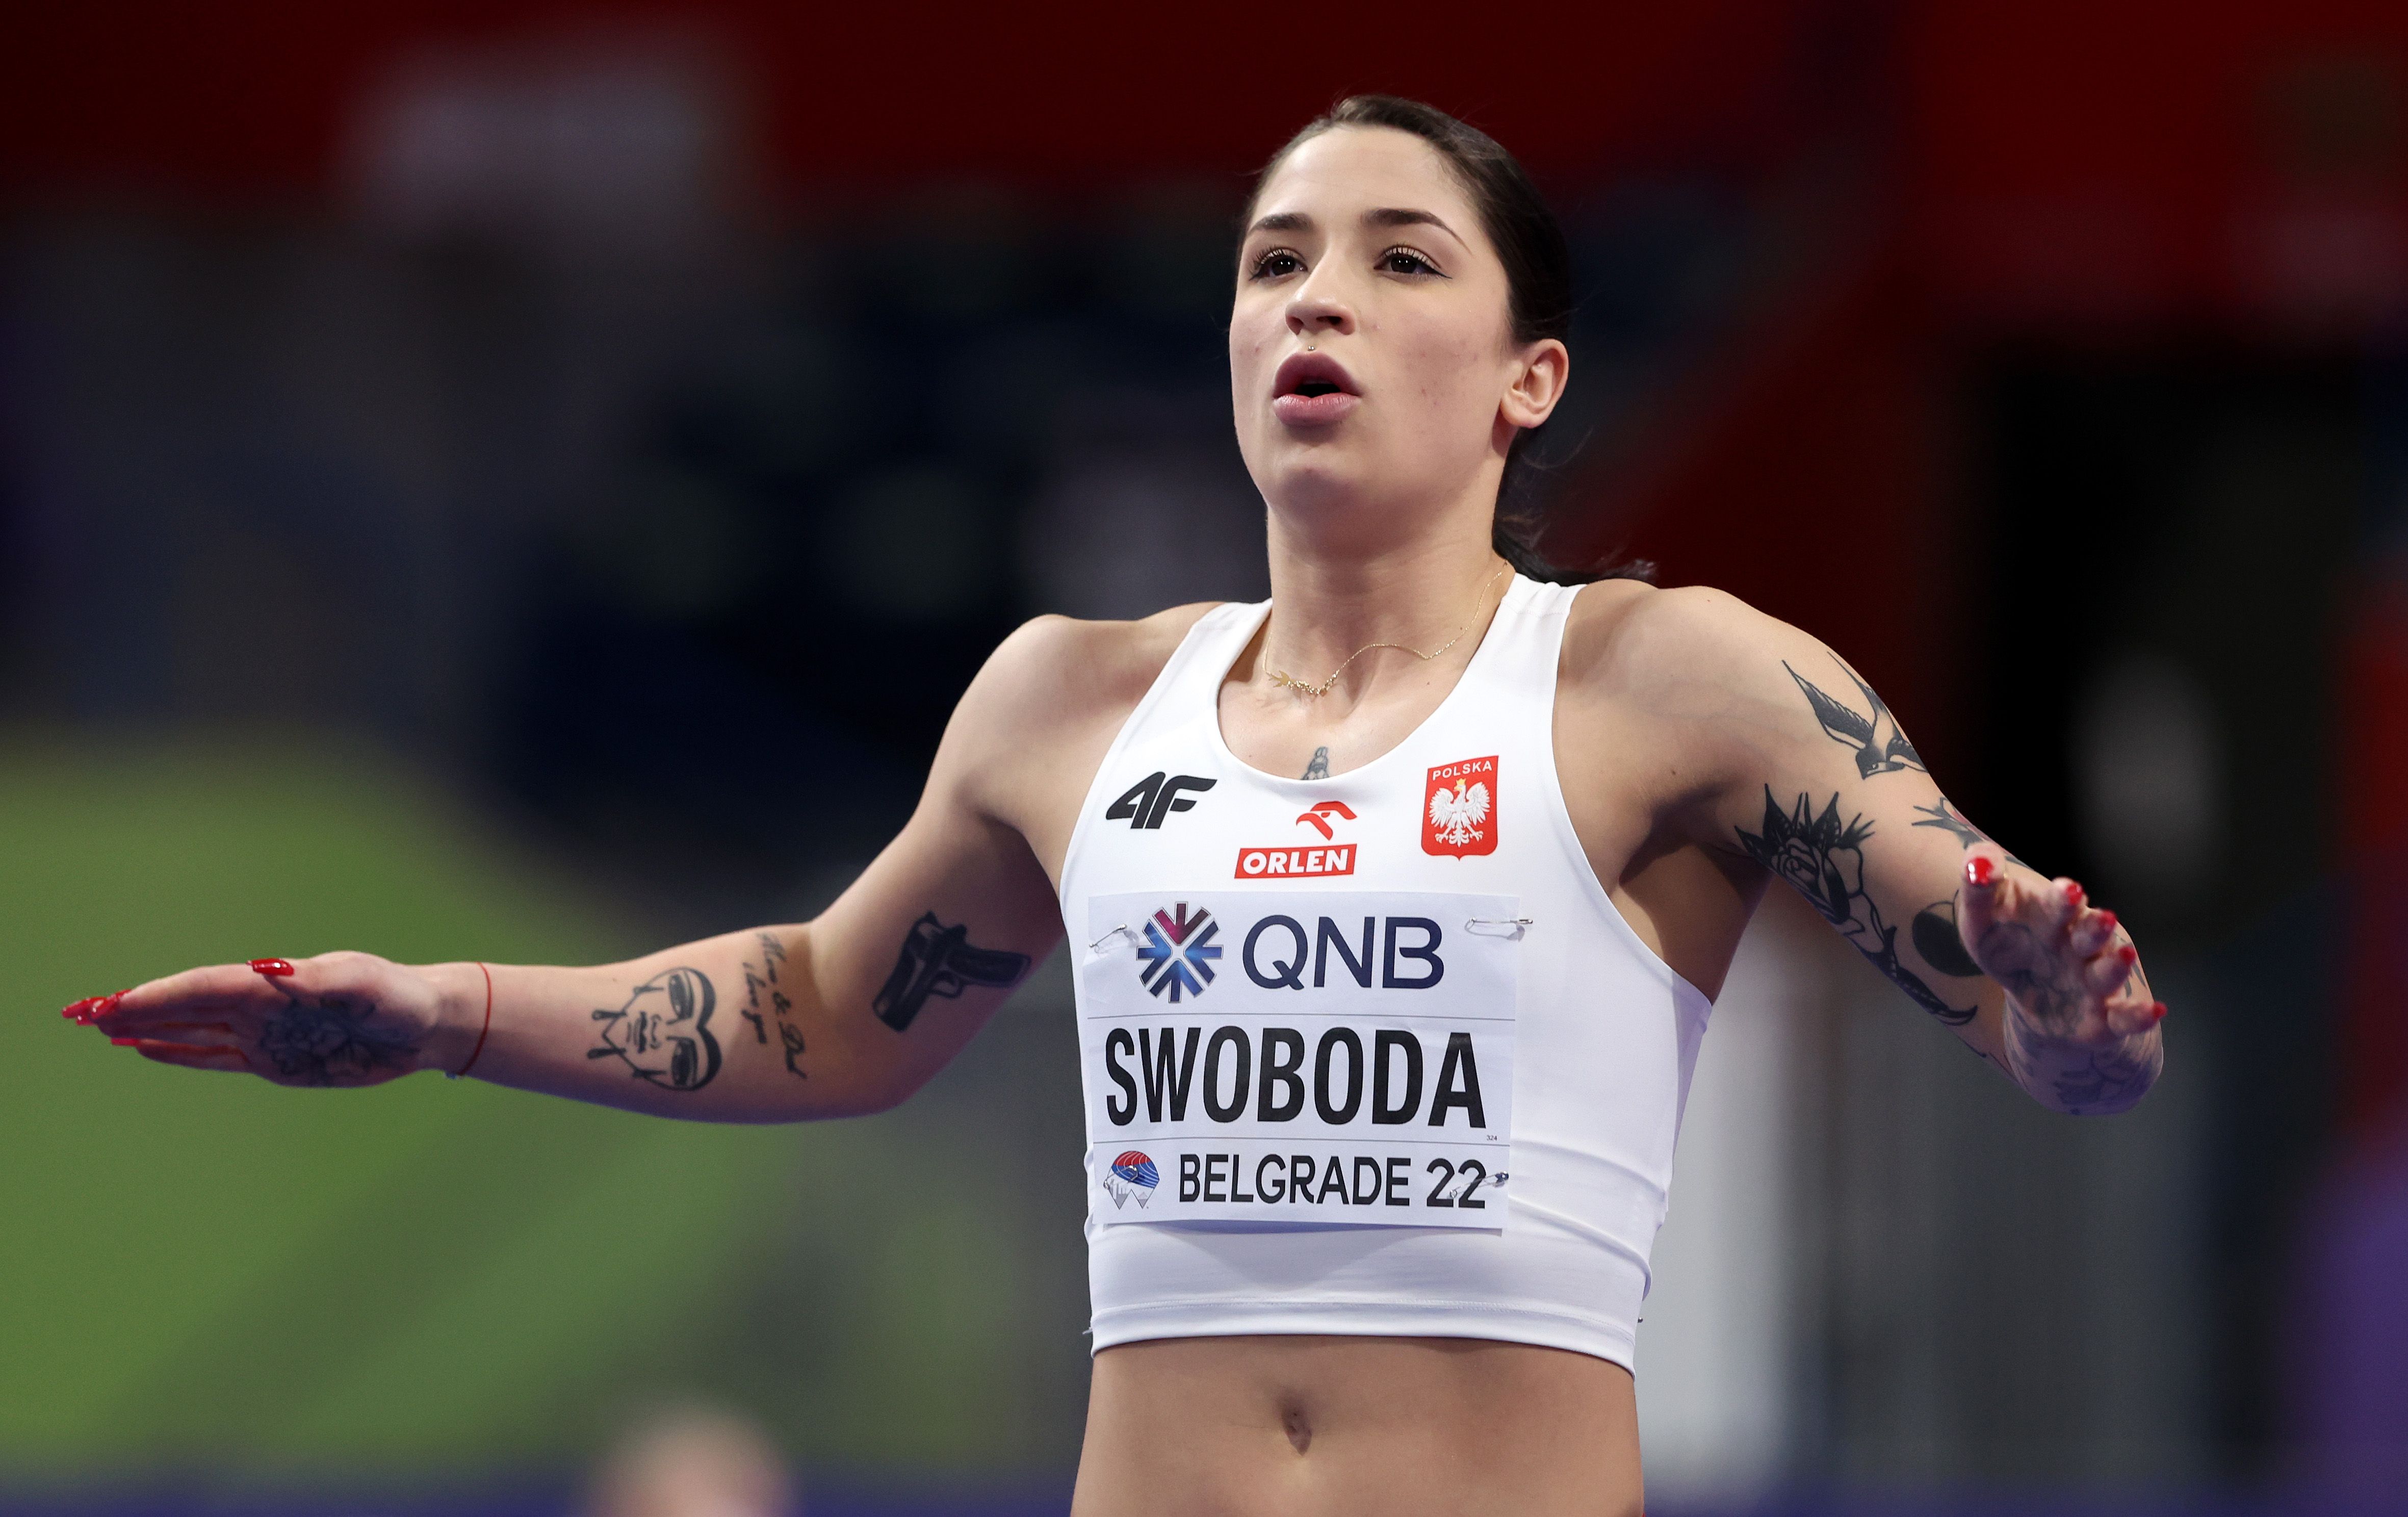 Ewa Swoboda at the World Athletics Indoor Championships Belgrade 22